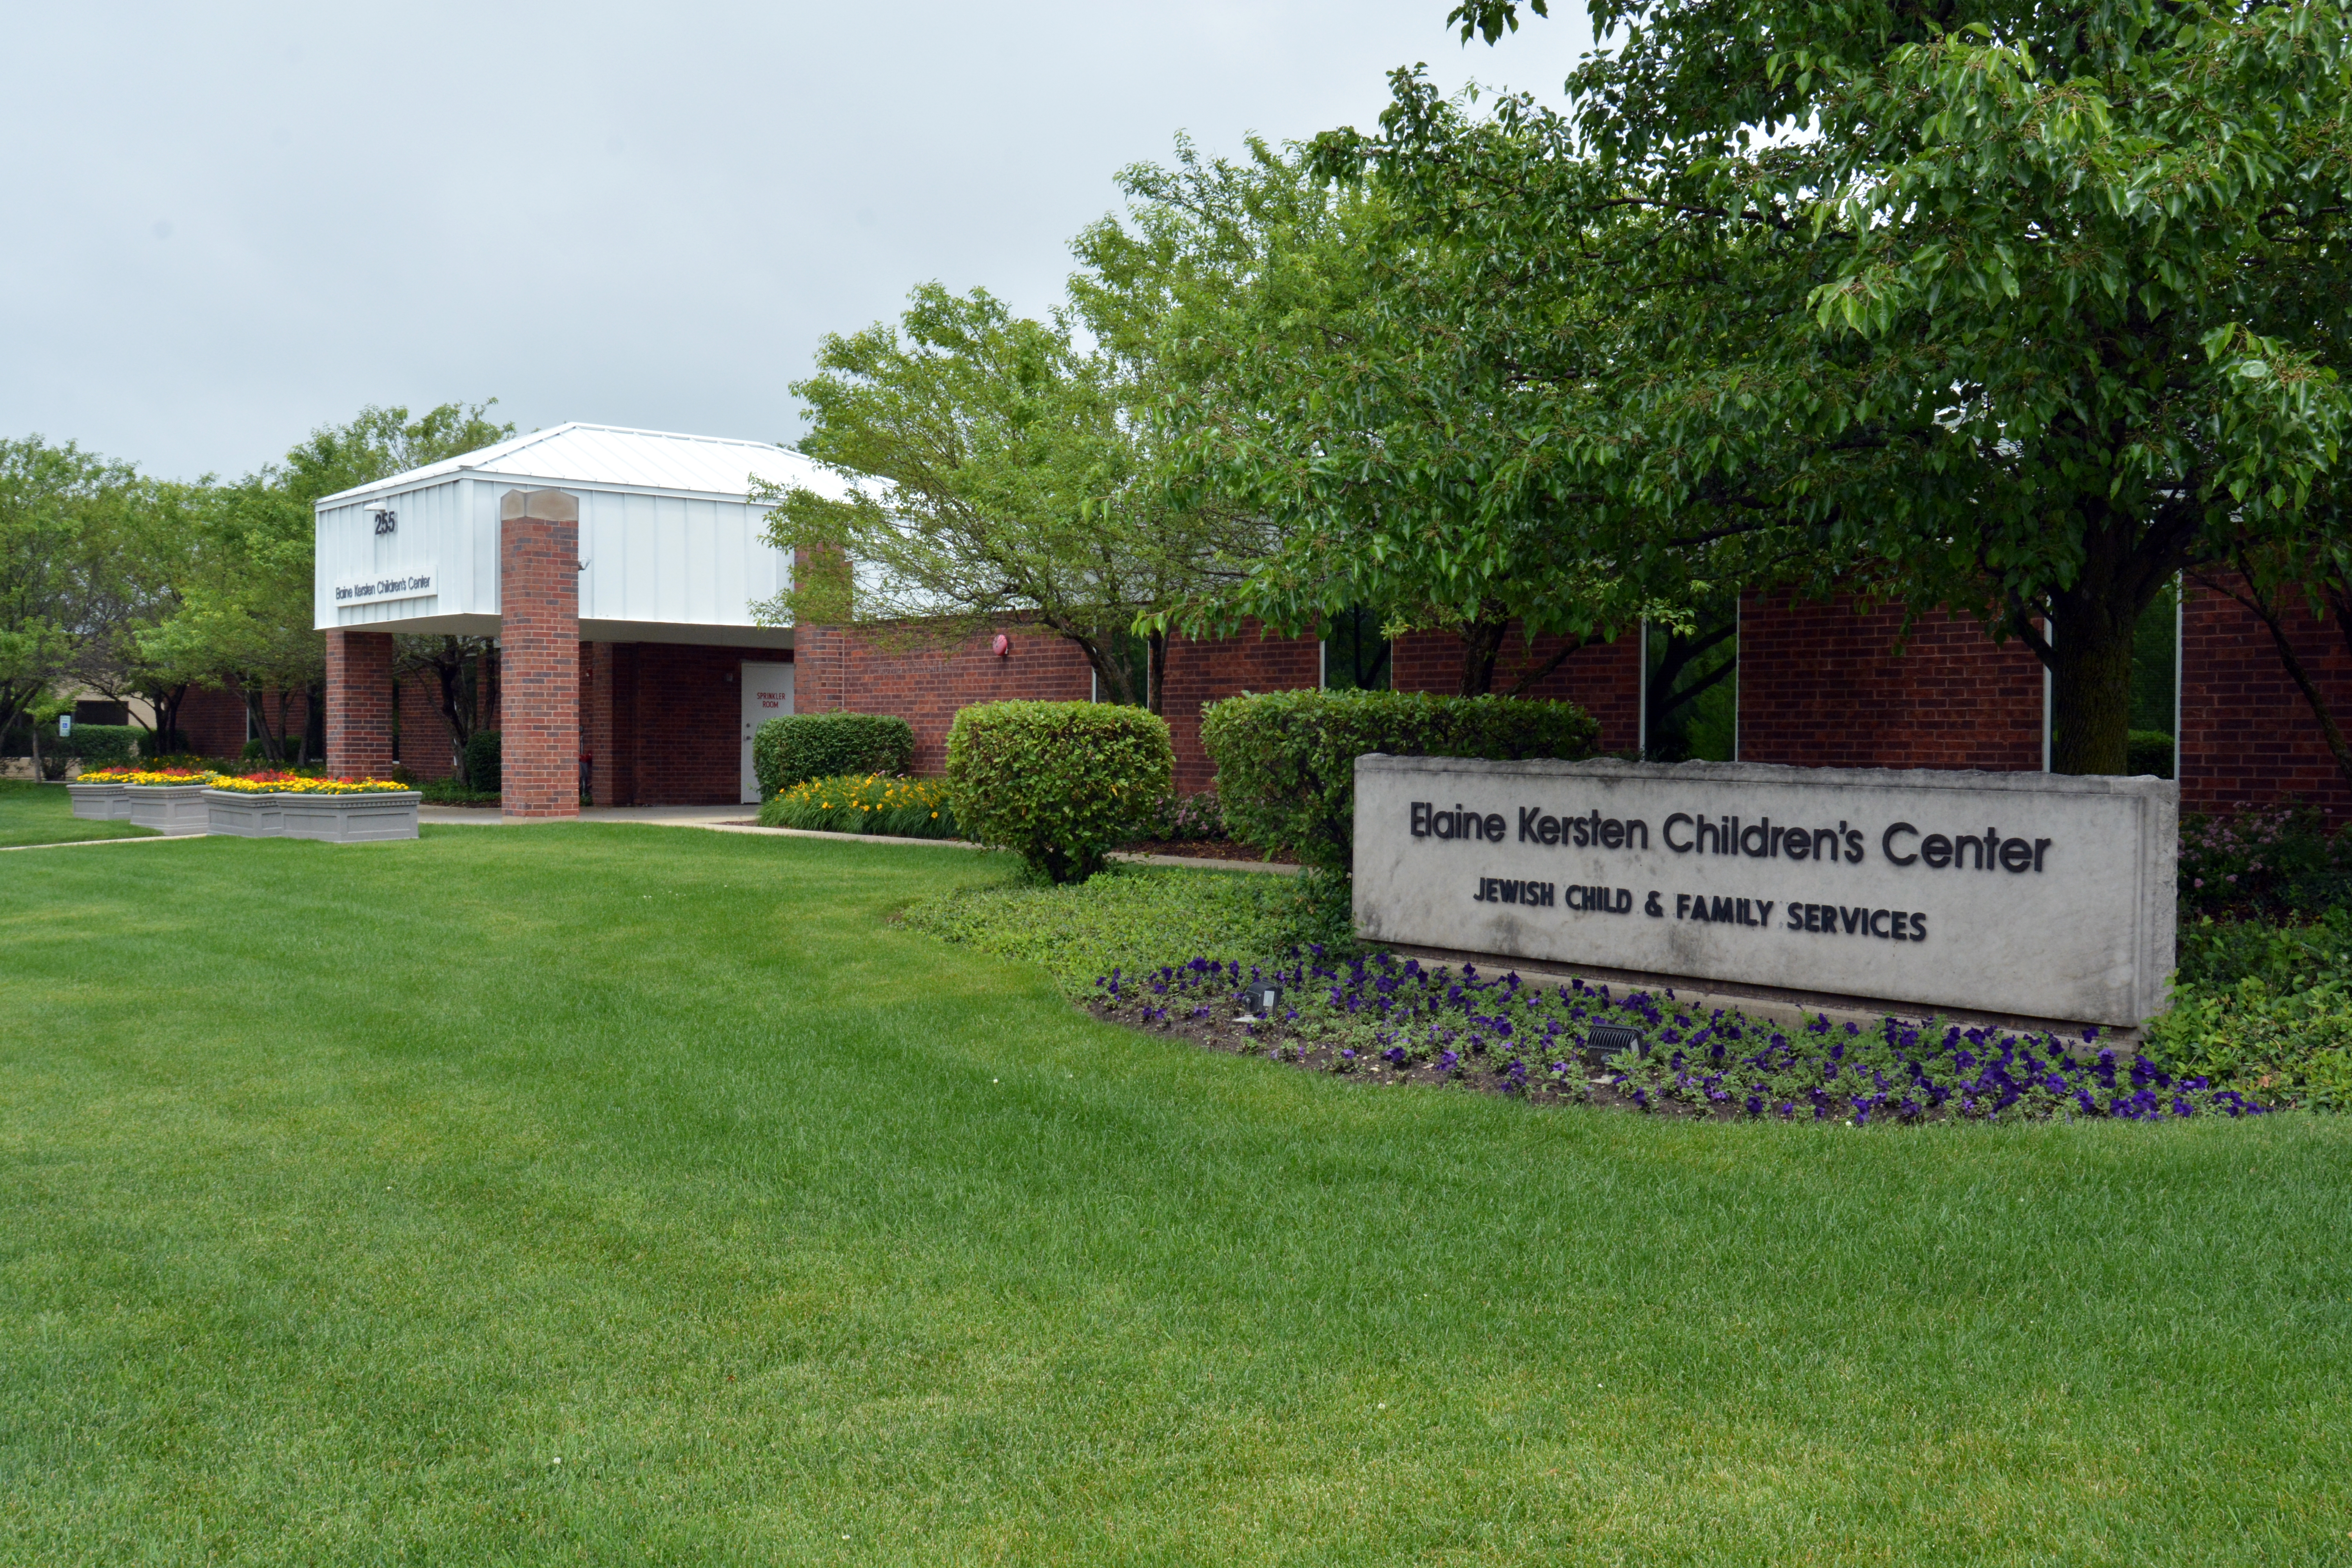 Elaine Kersten Children's Center